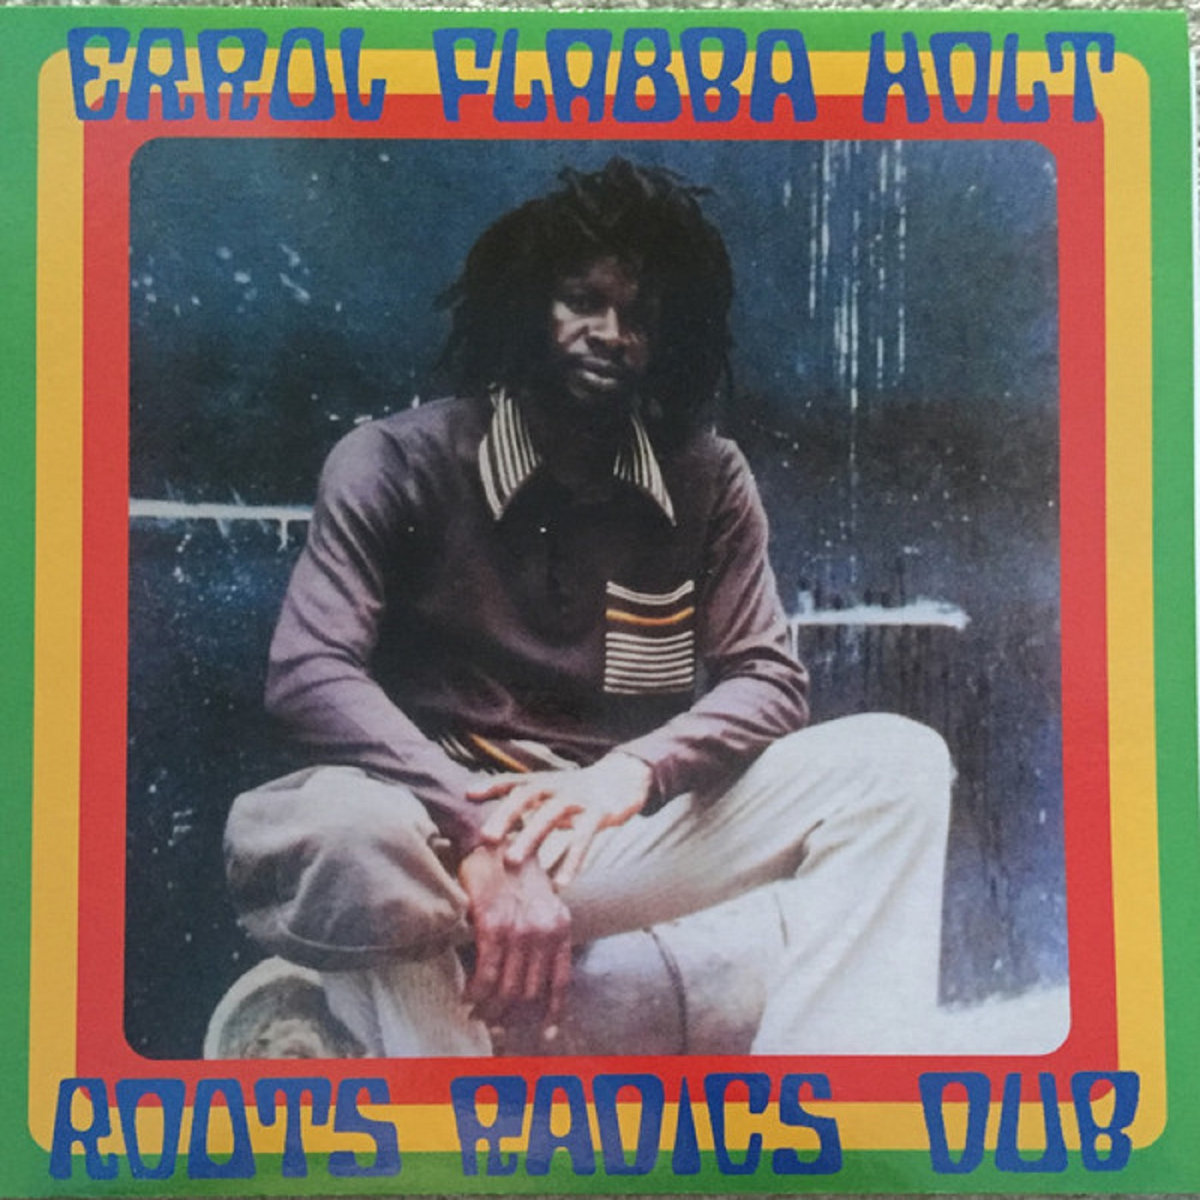 ERROL FLABBA HOLT - Roots Radics Dub (1981)